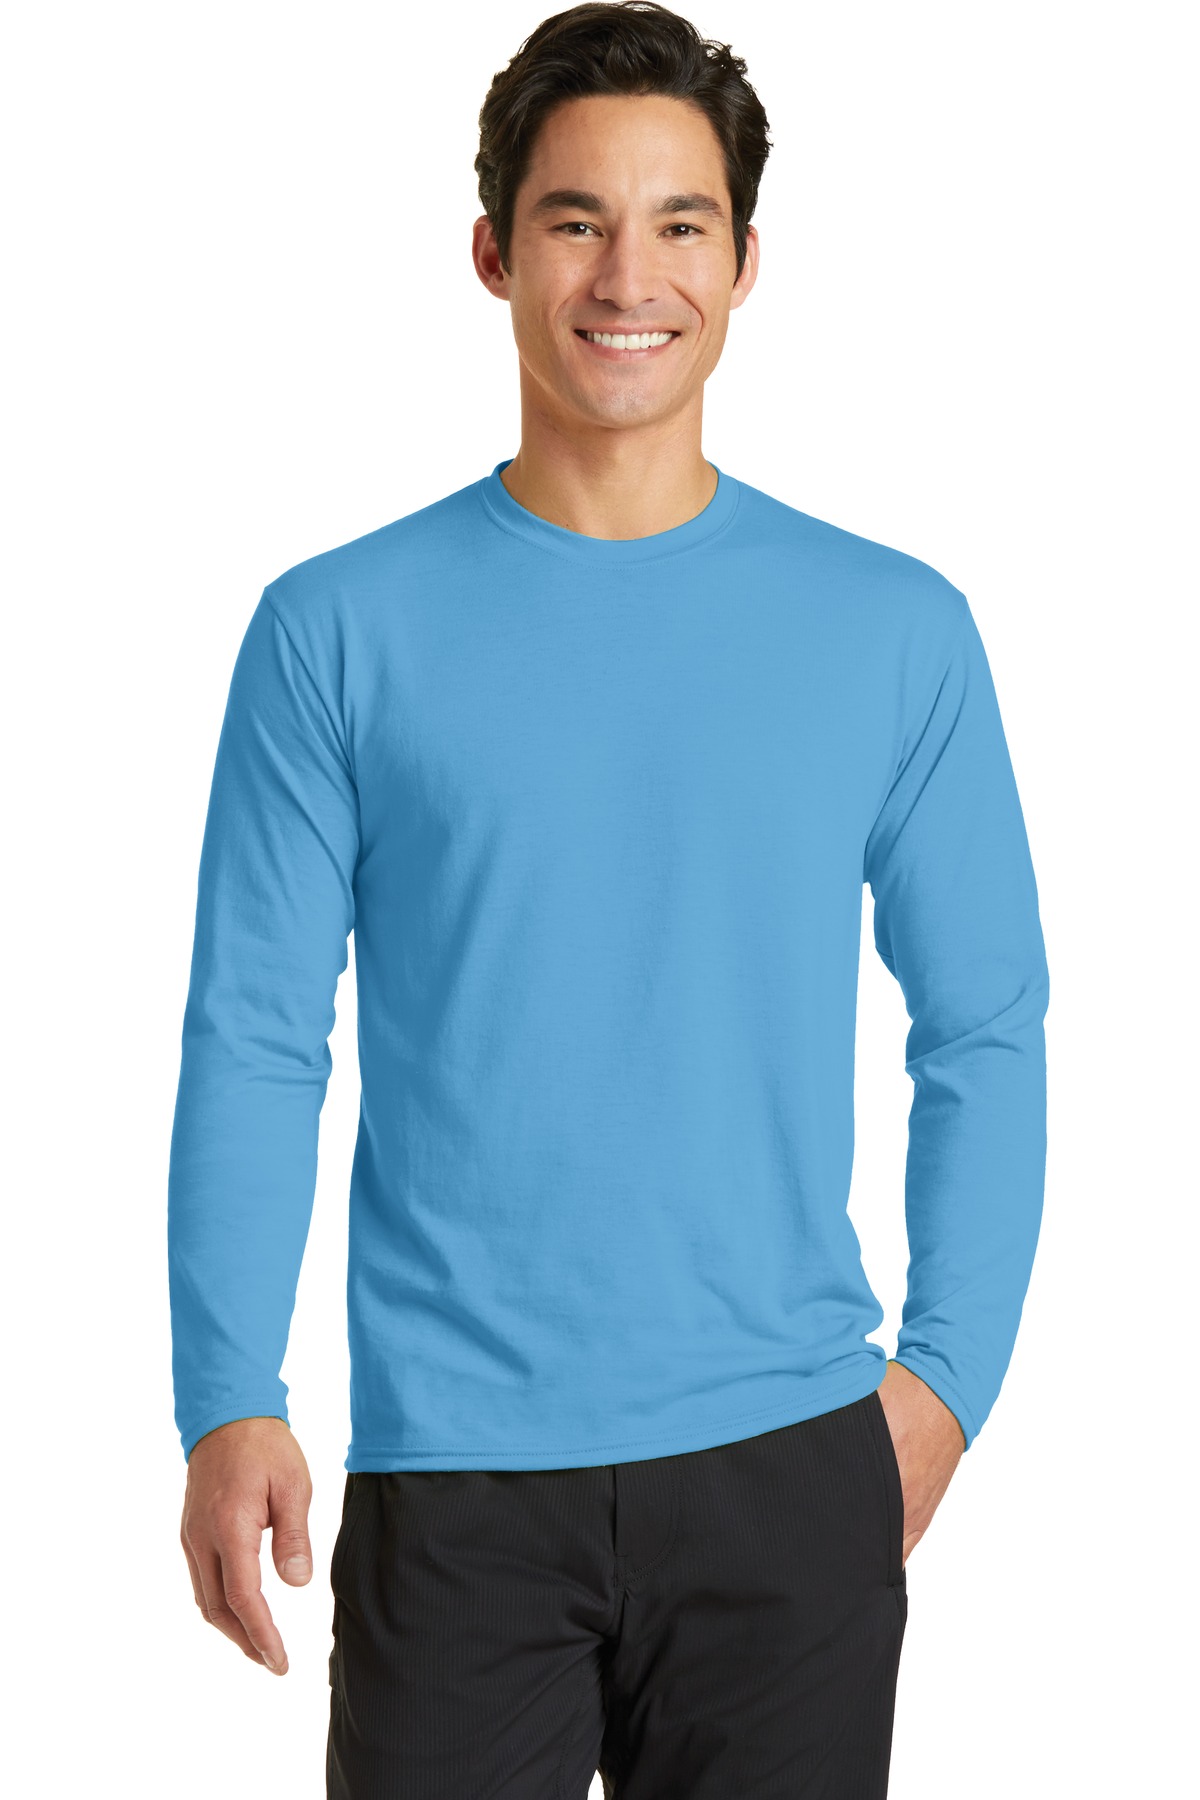 Port & Company Long Sleeve Performance Blend T-Shirt - PC381LS